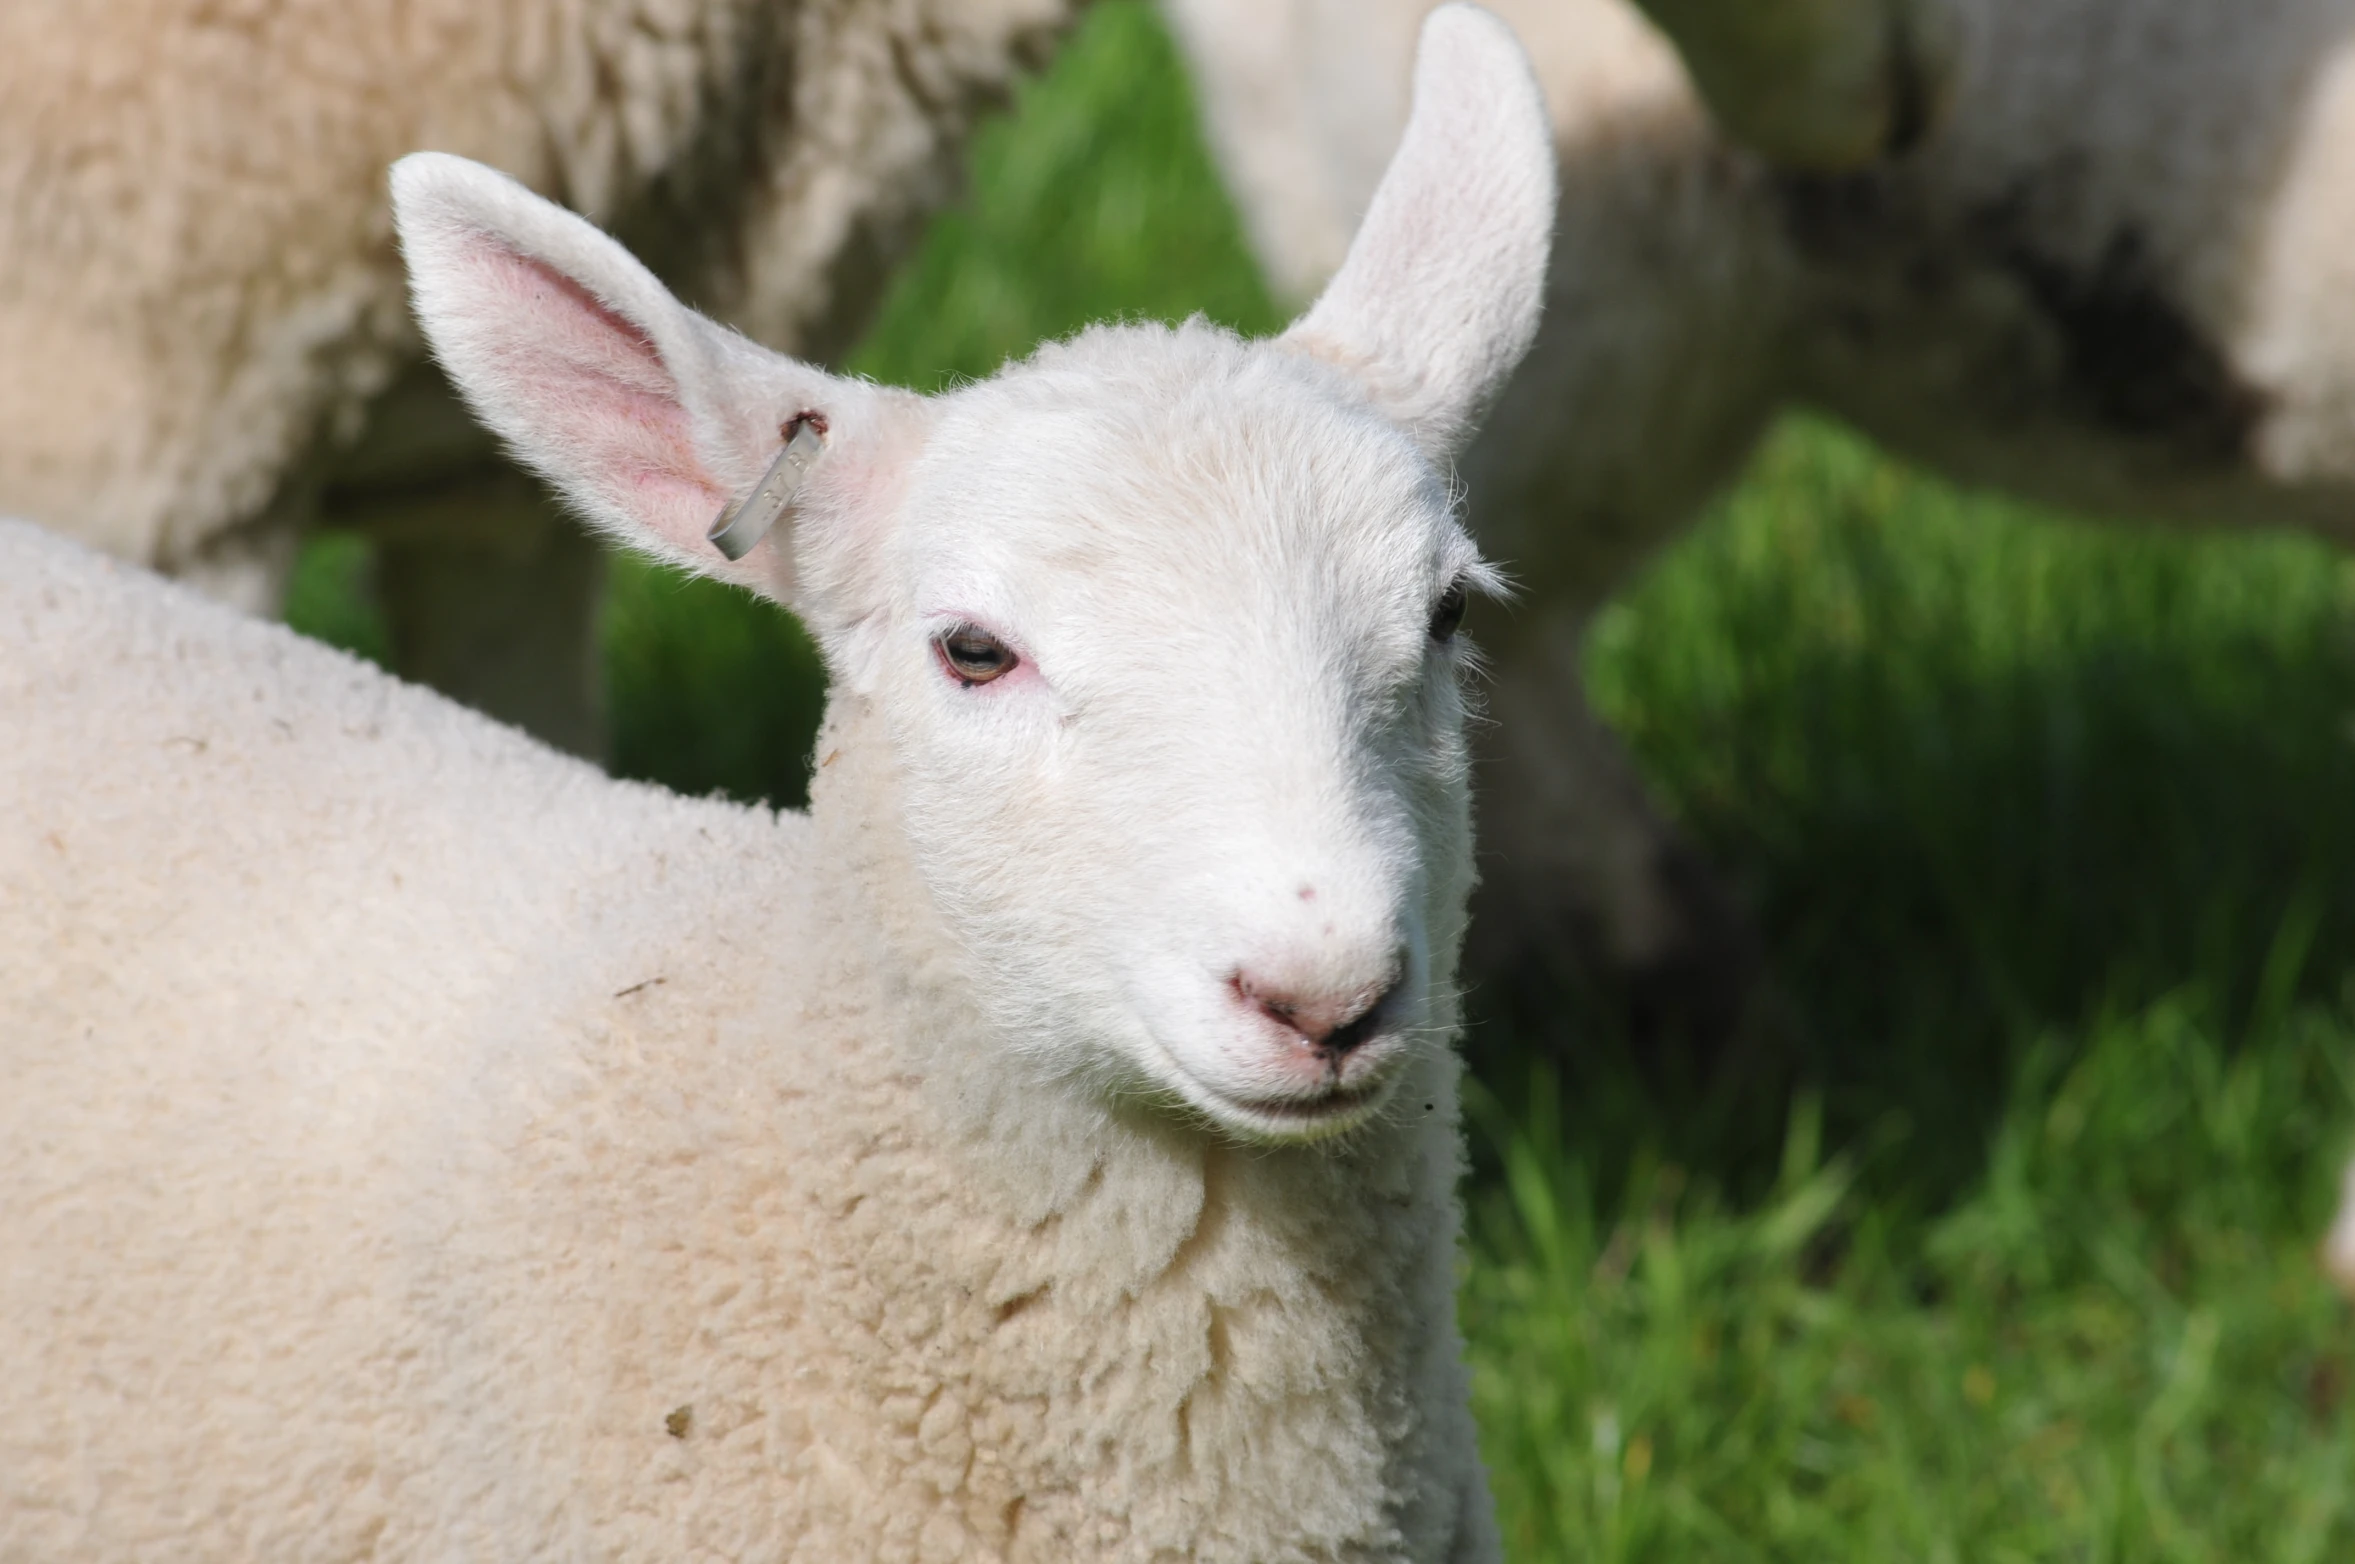 a baby sheep staring intently at the camera